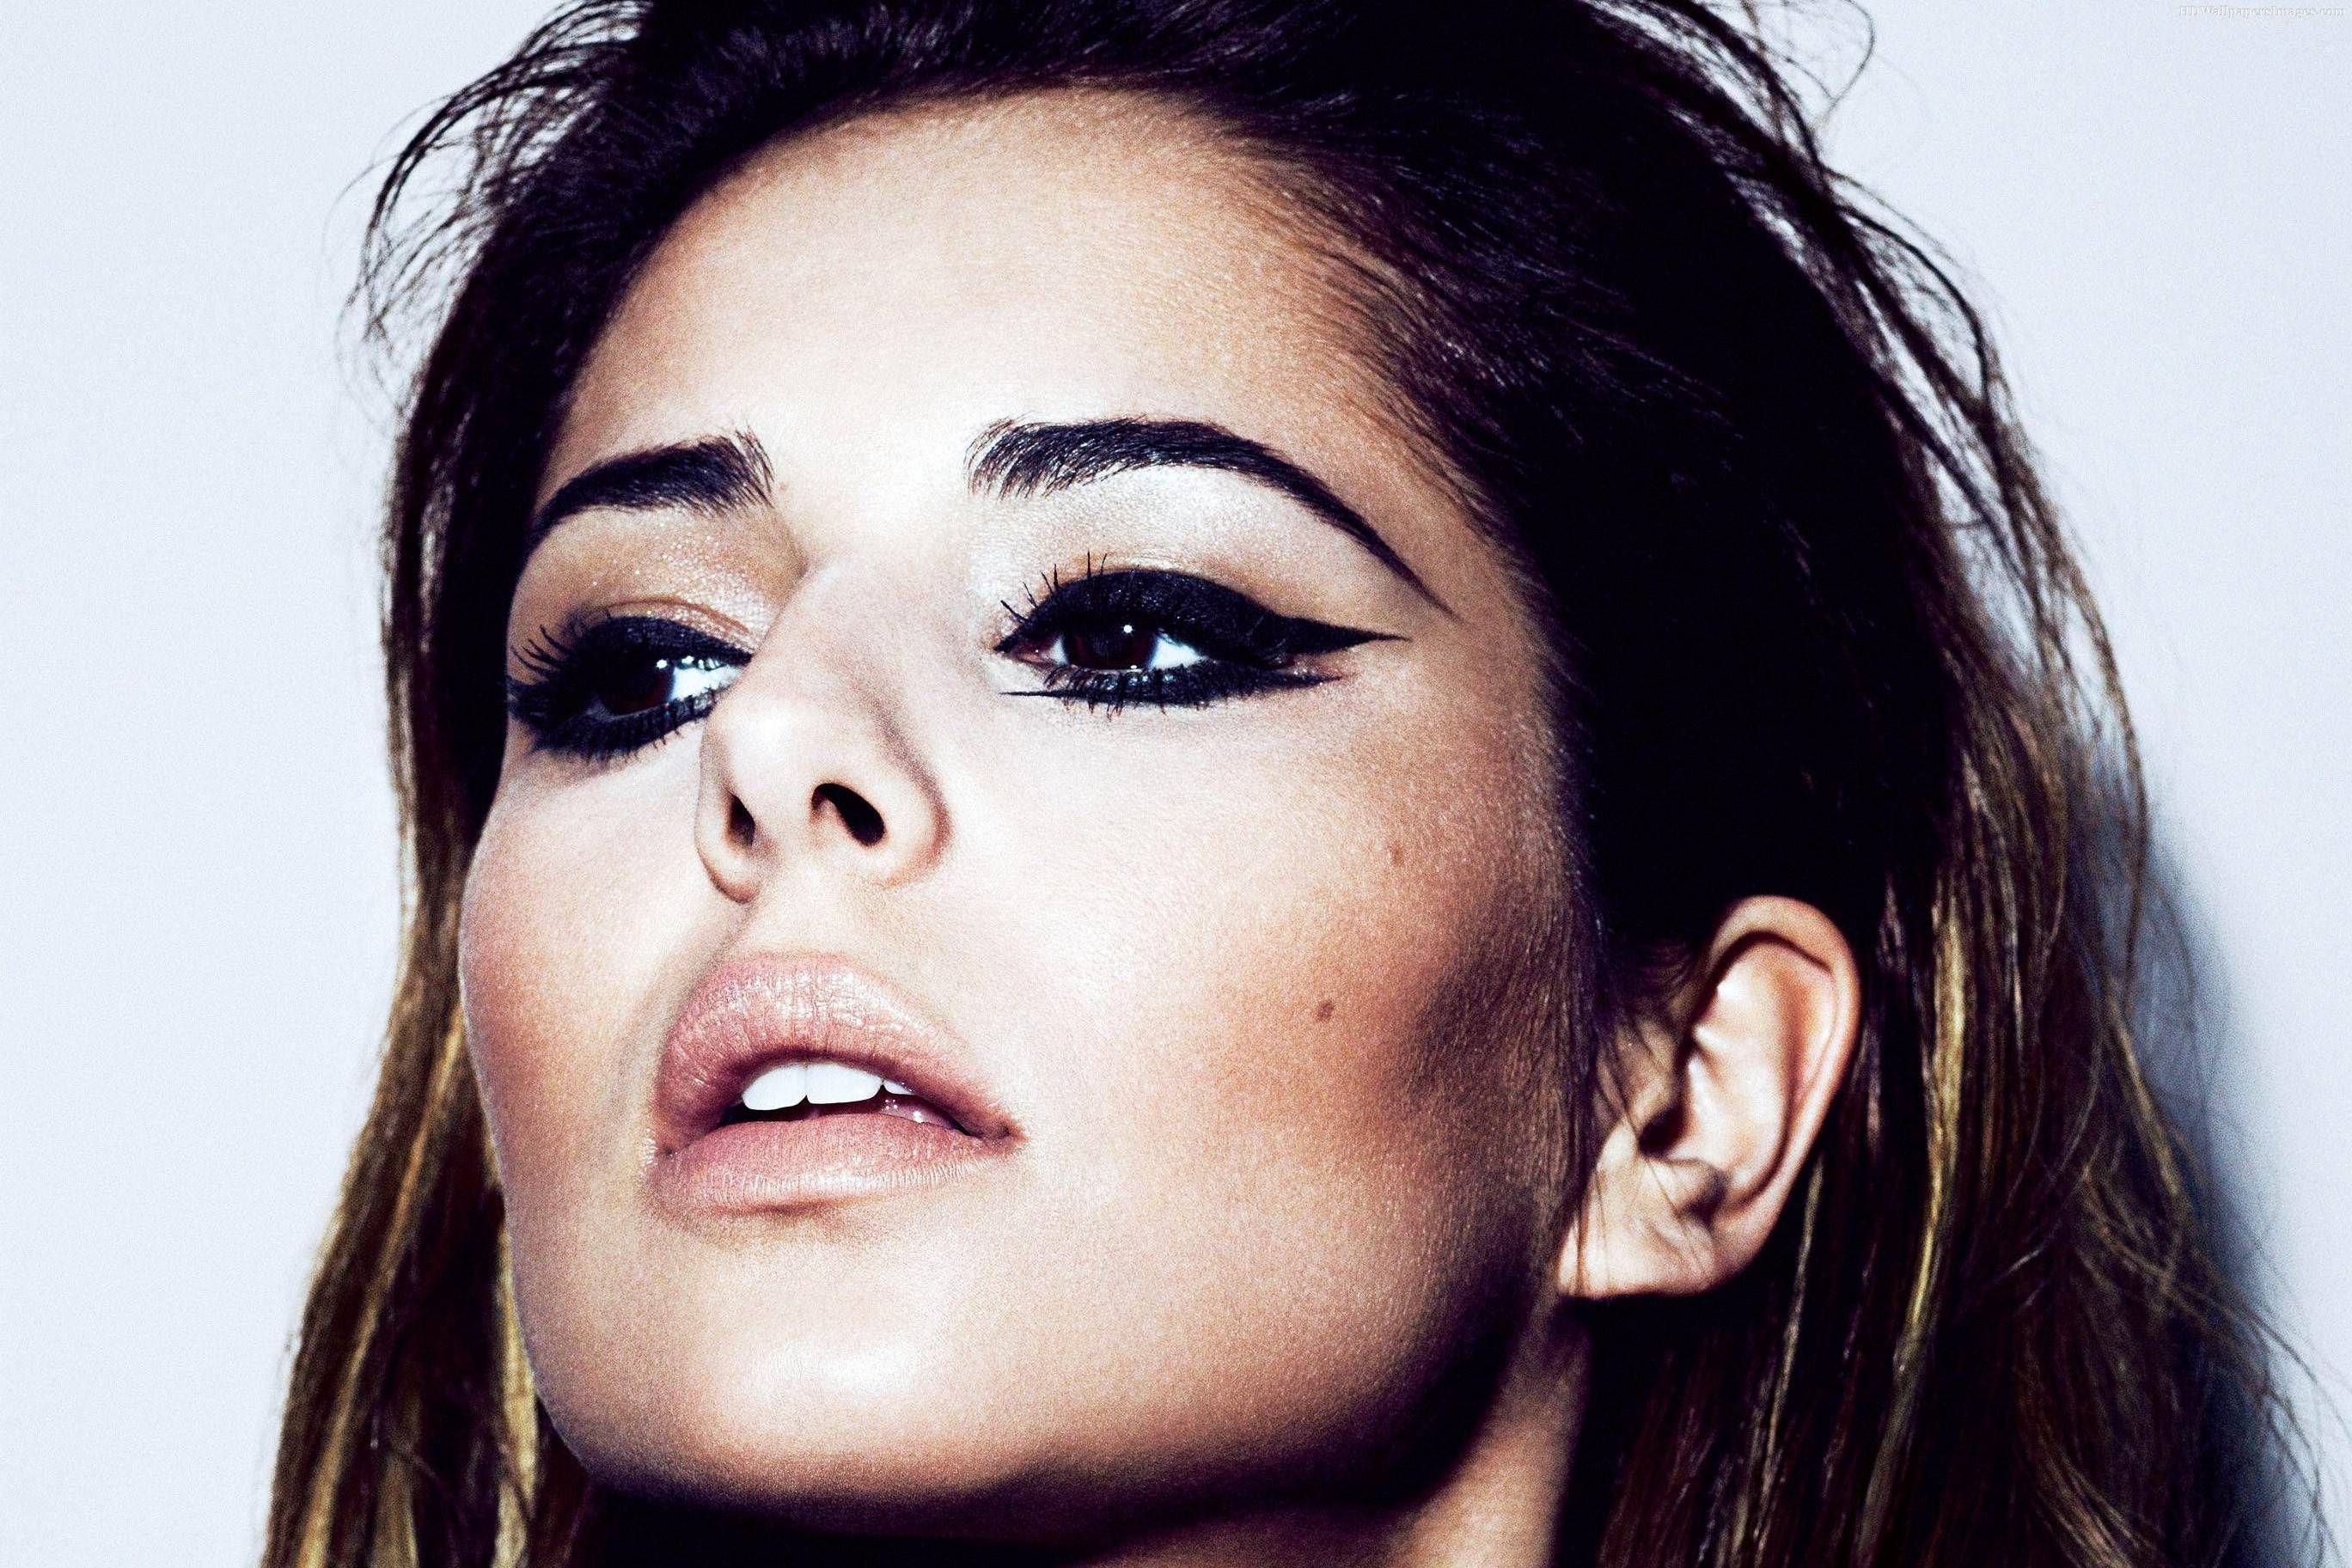 Cheryl Cole 2015 Image. HD Wallpaper Image